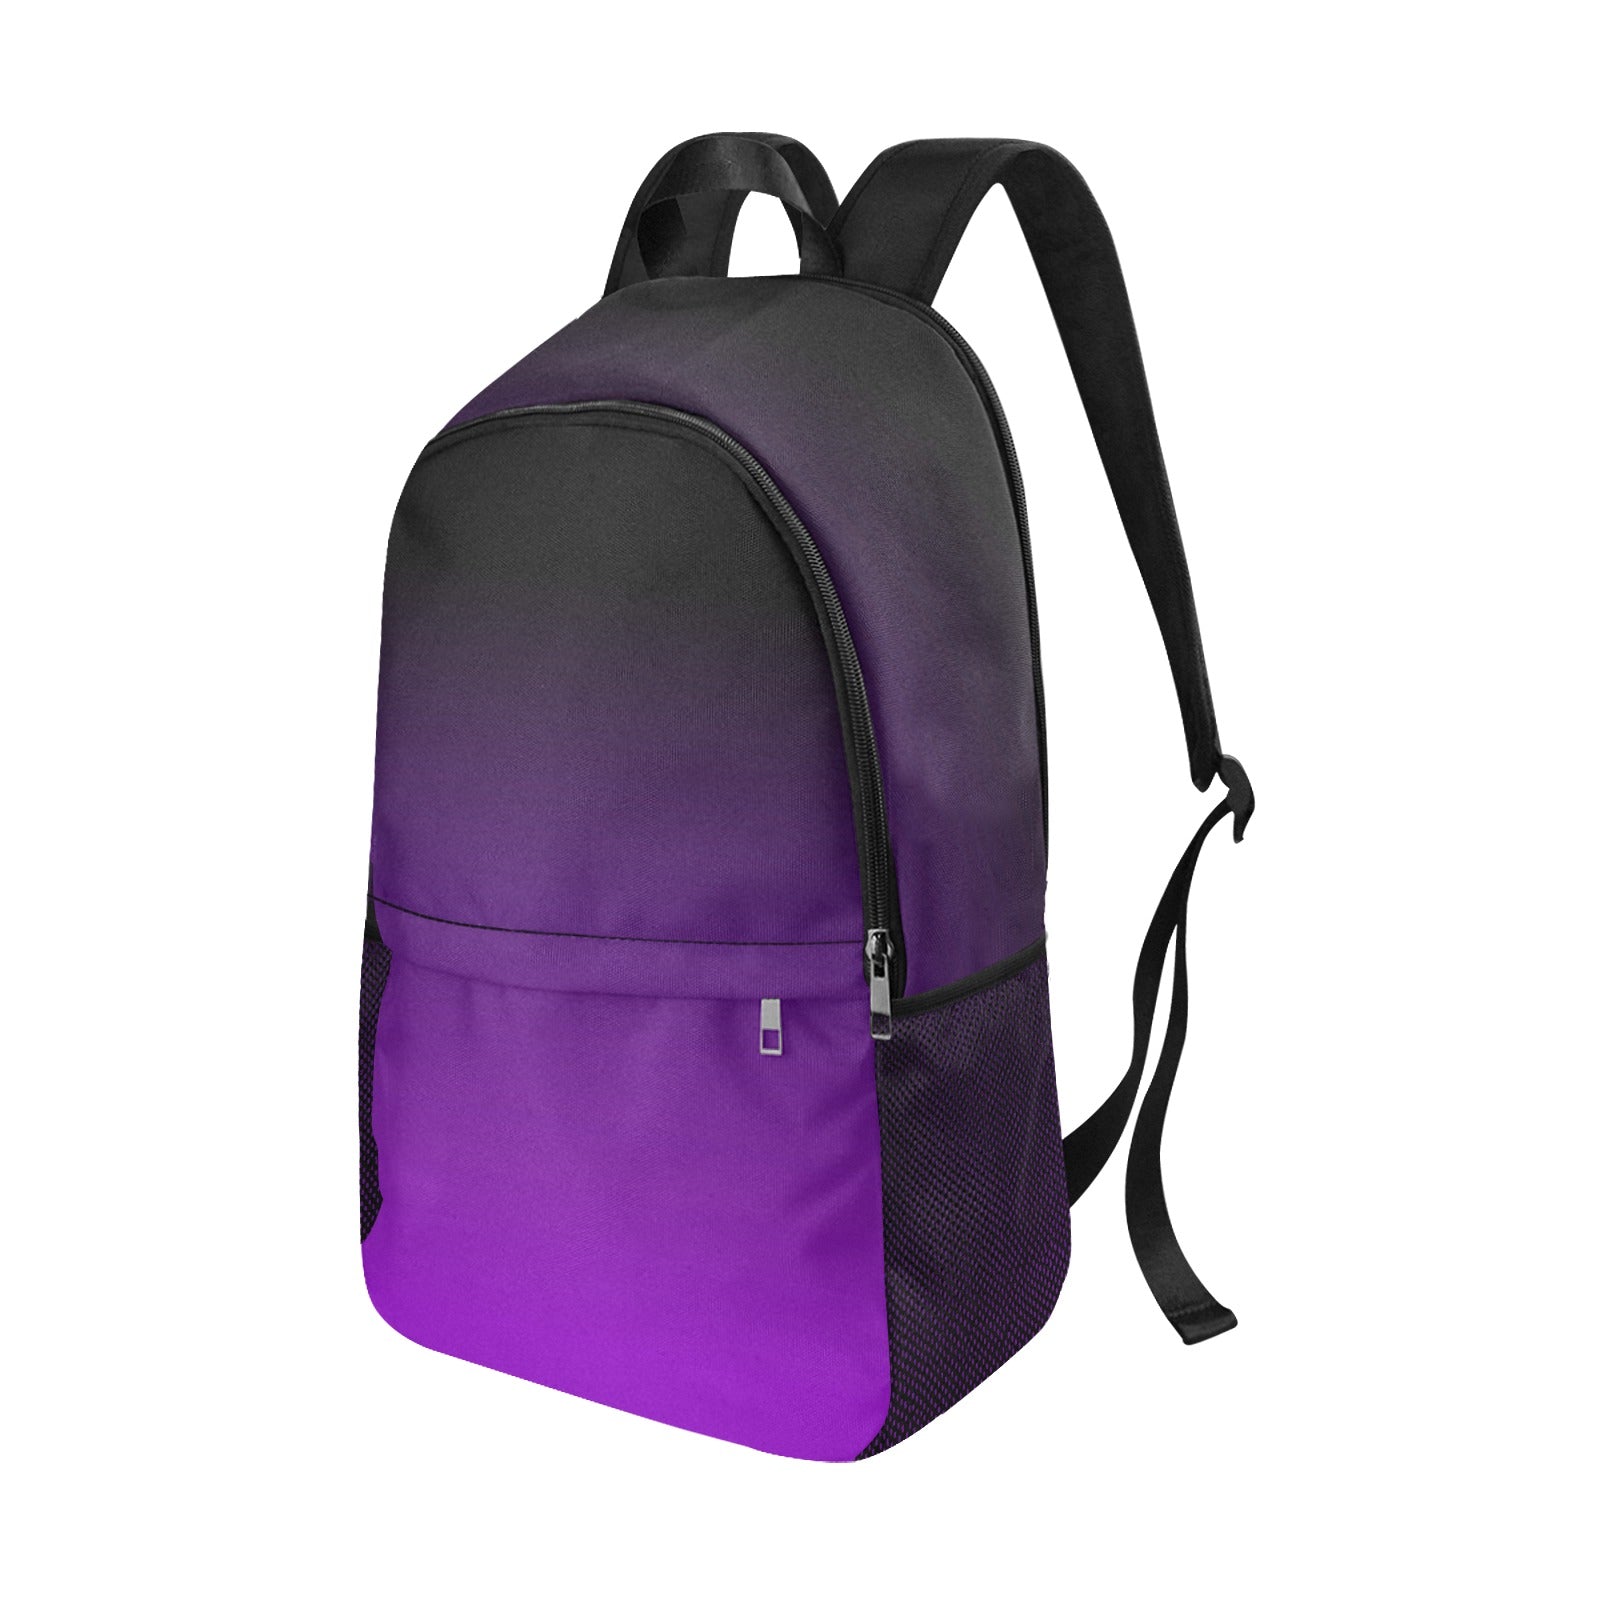 Black Purple Backpack, Ombre Gradient Tie dye Men Women Kids Gift Him Her School College Waterproof Side Mesh Pockets Aesthetic Bag Starcove Fashion